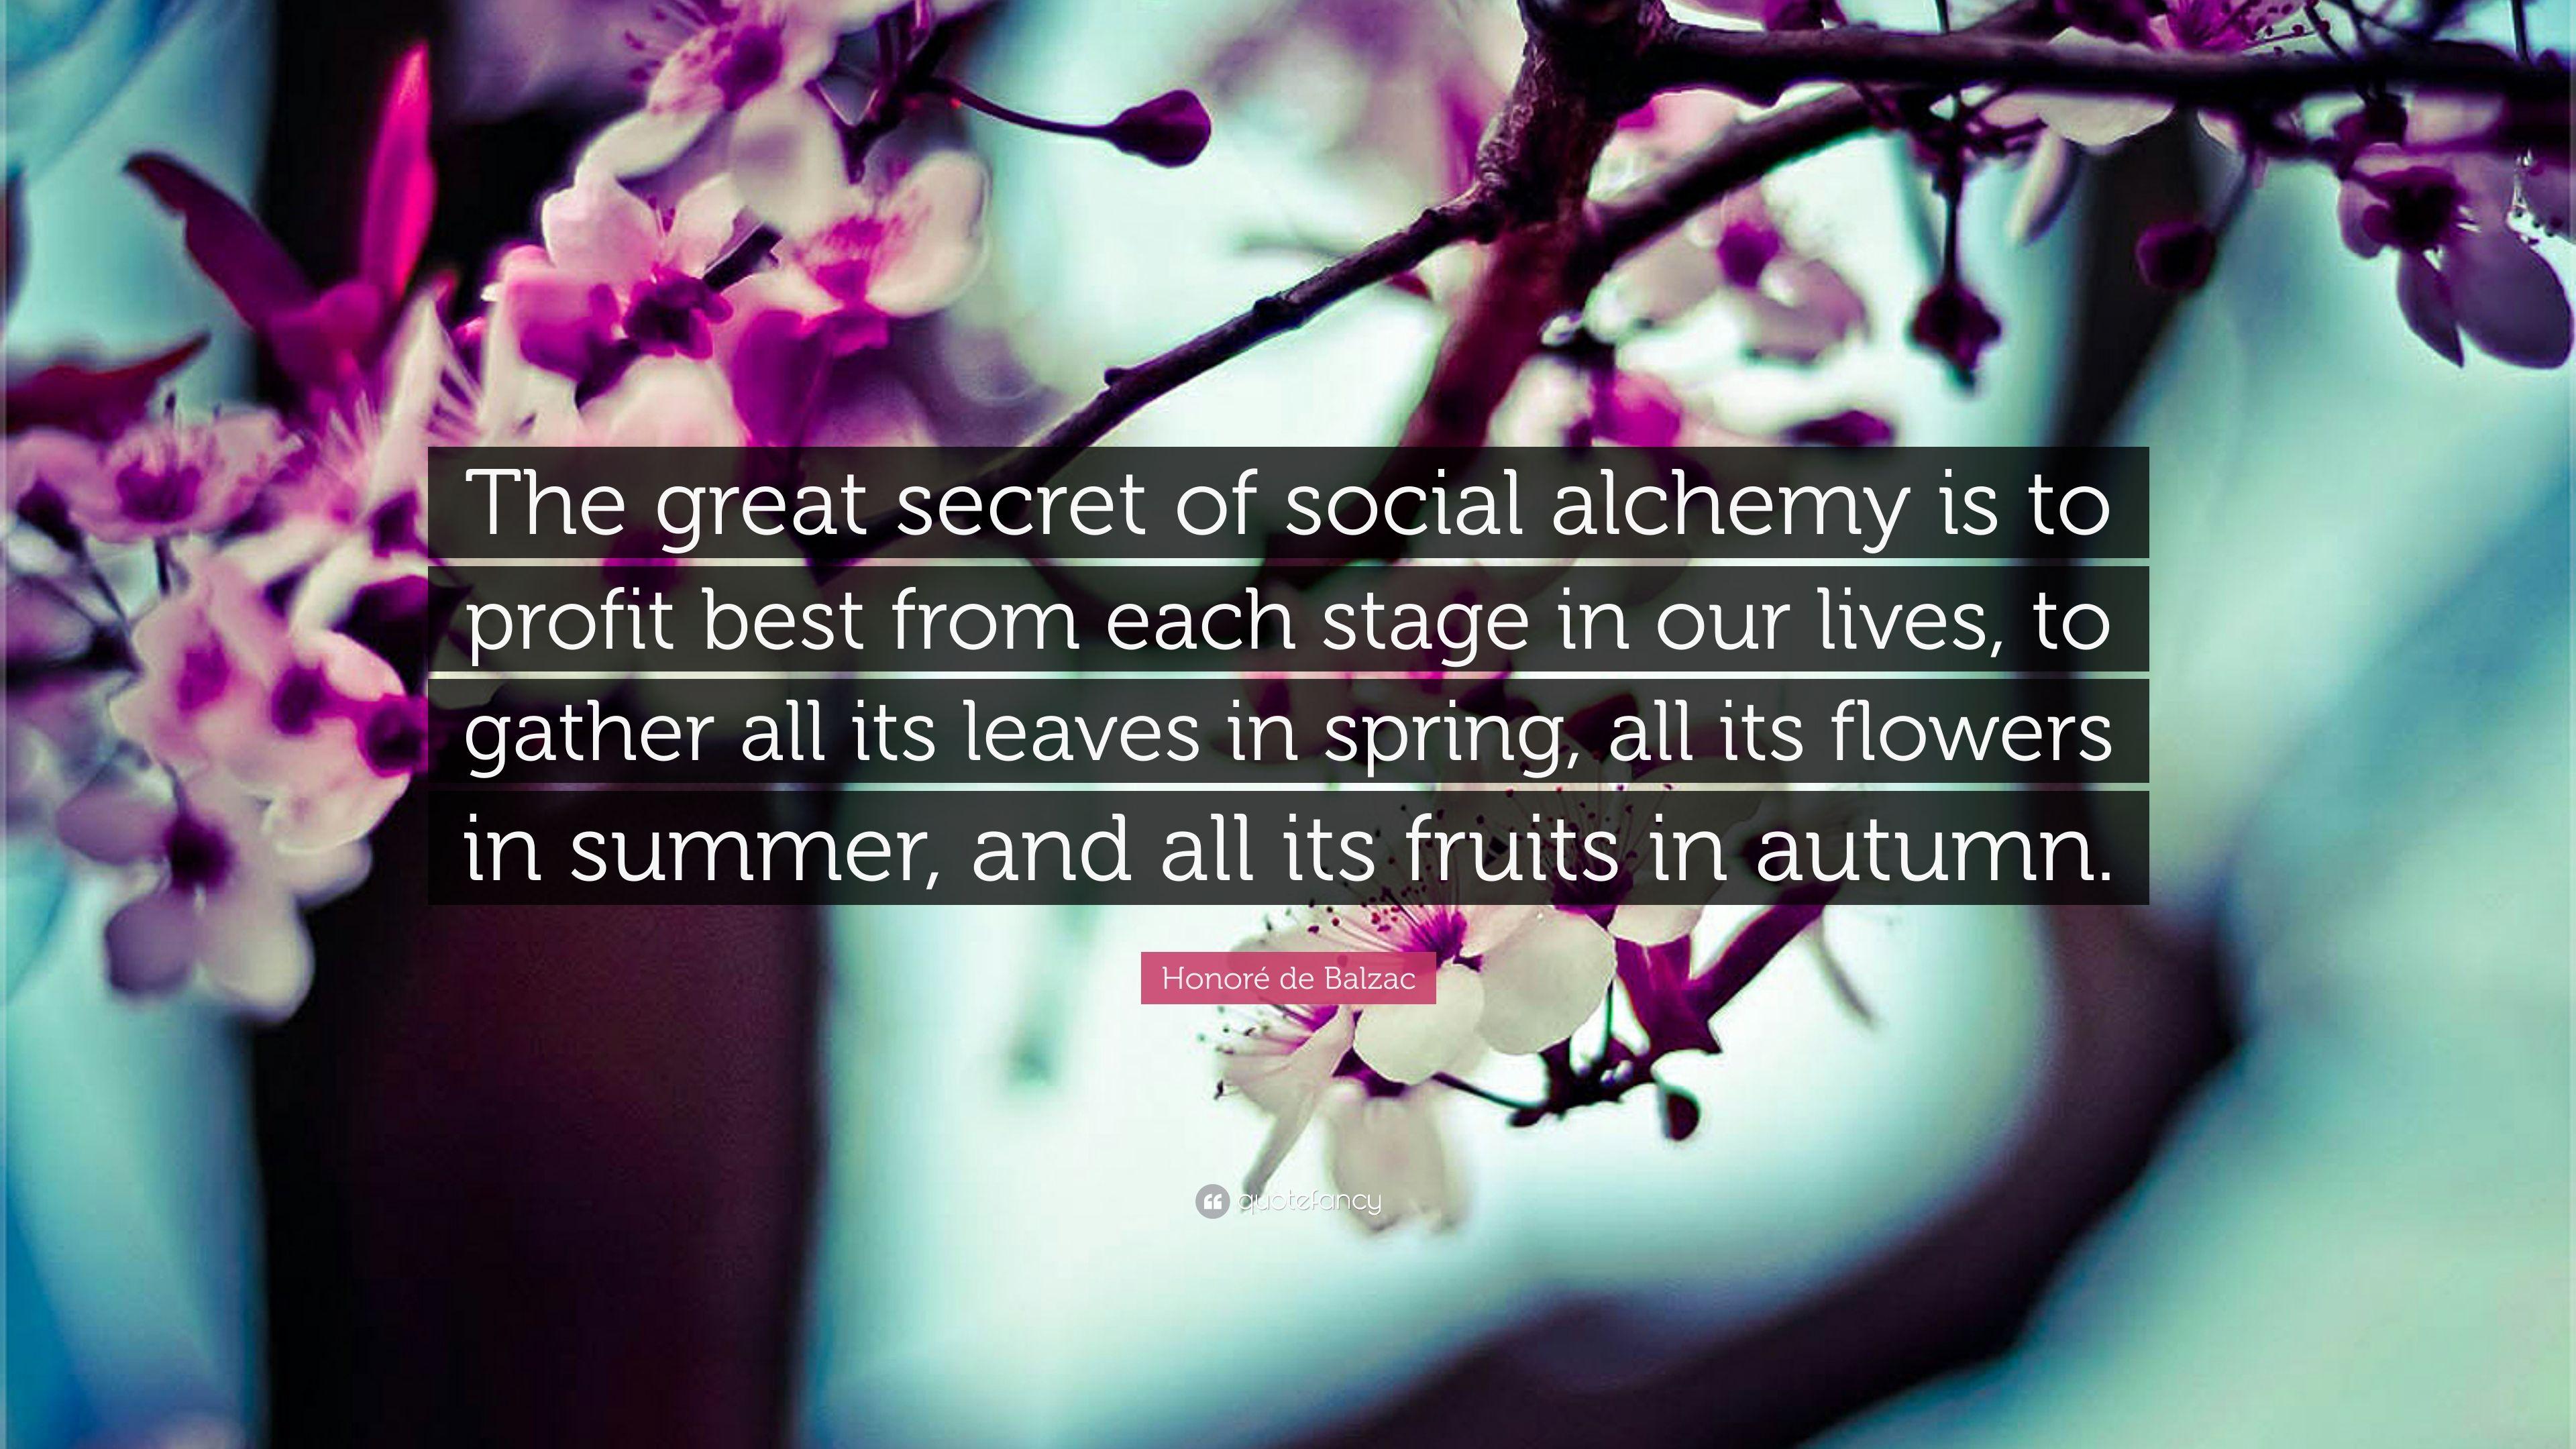 Honoré de Balzac Quote: “The great secret of social alchemy is to